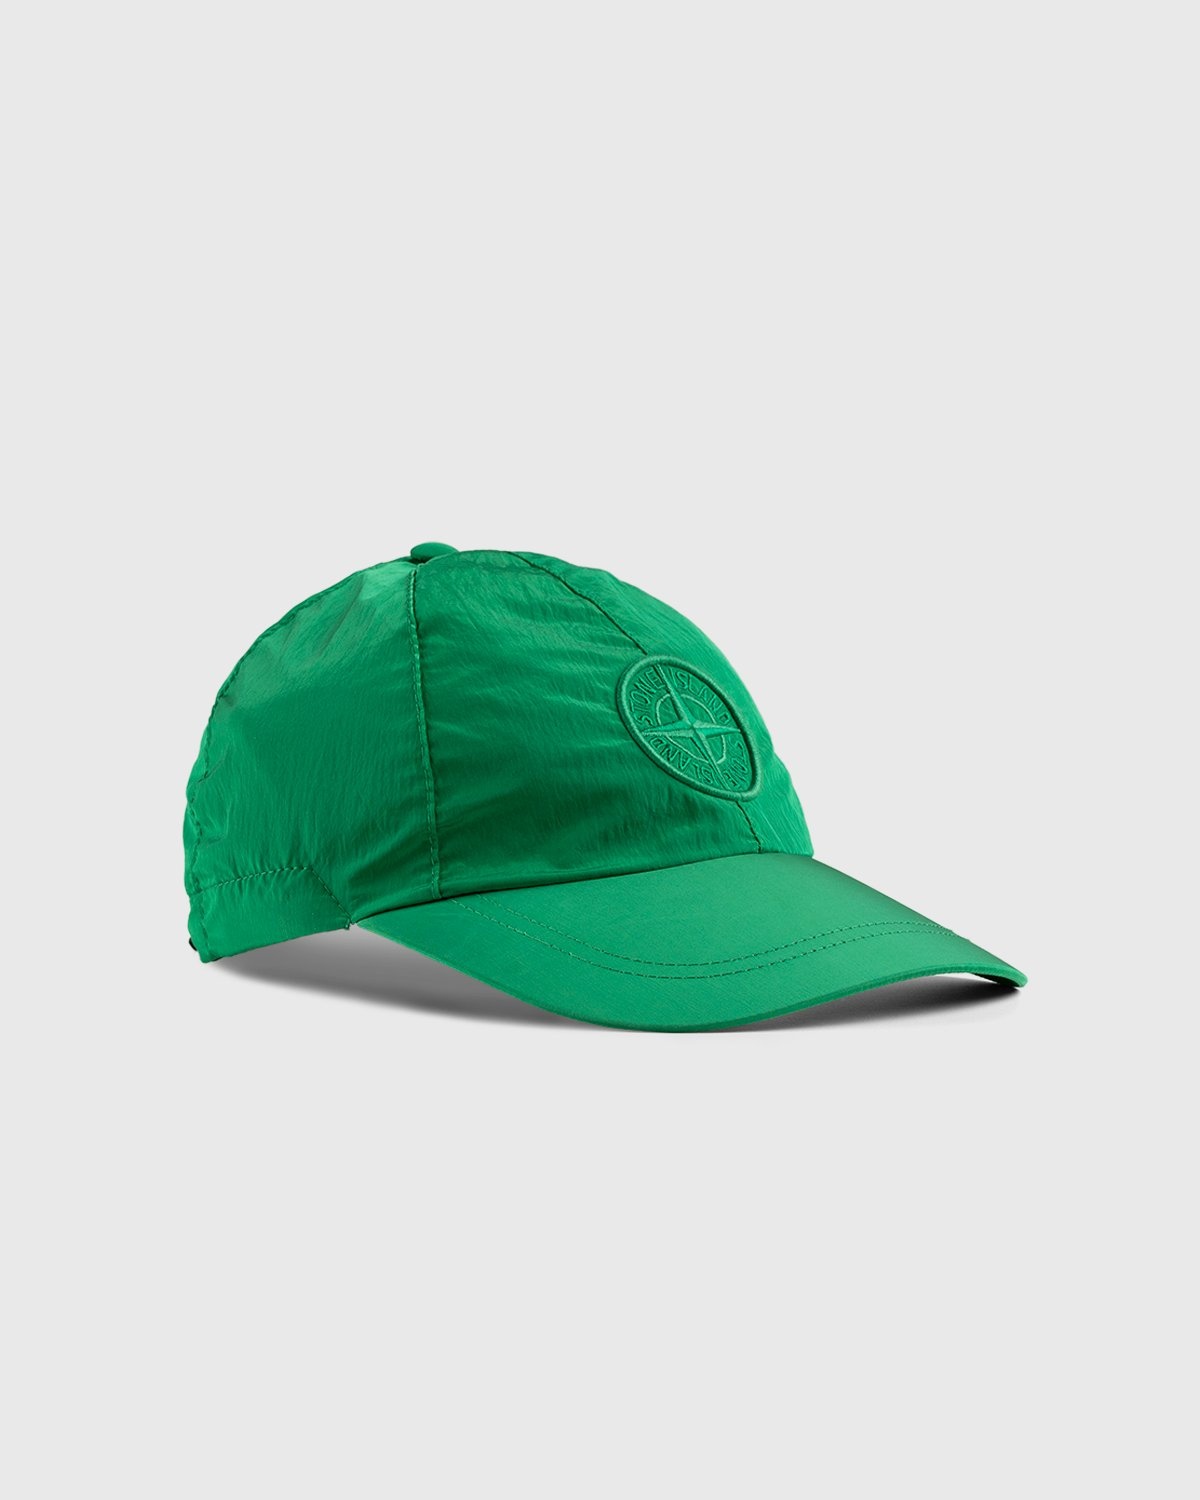 Stone Island – Six Panel Hat Green - Caps - Green - Image 1